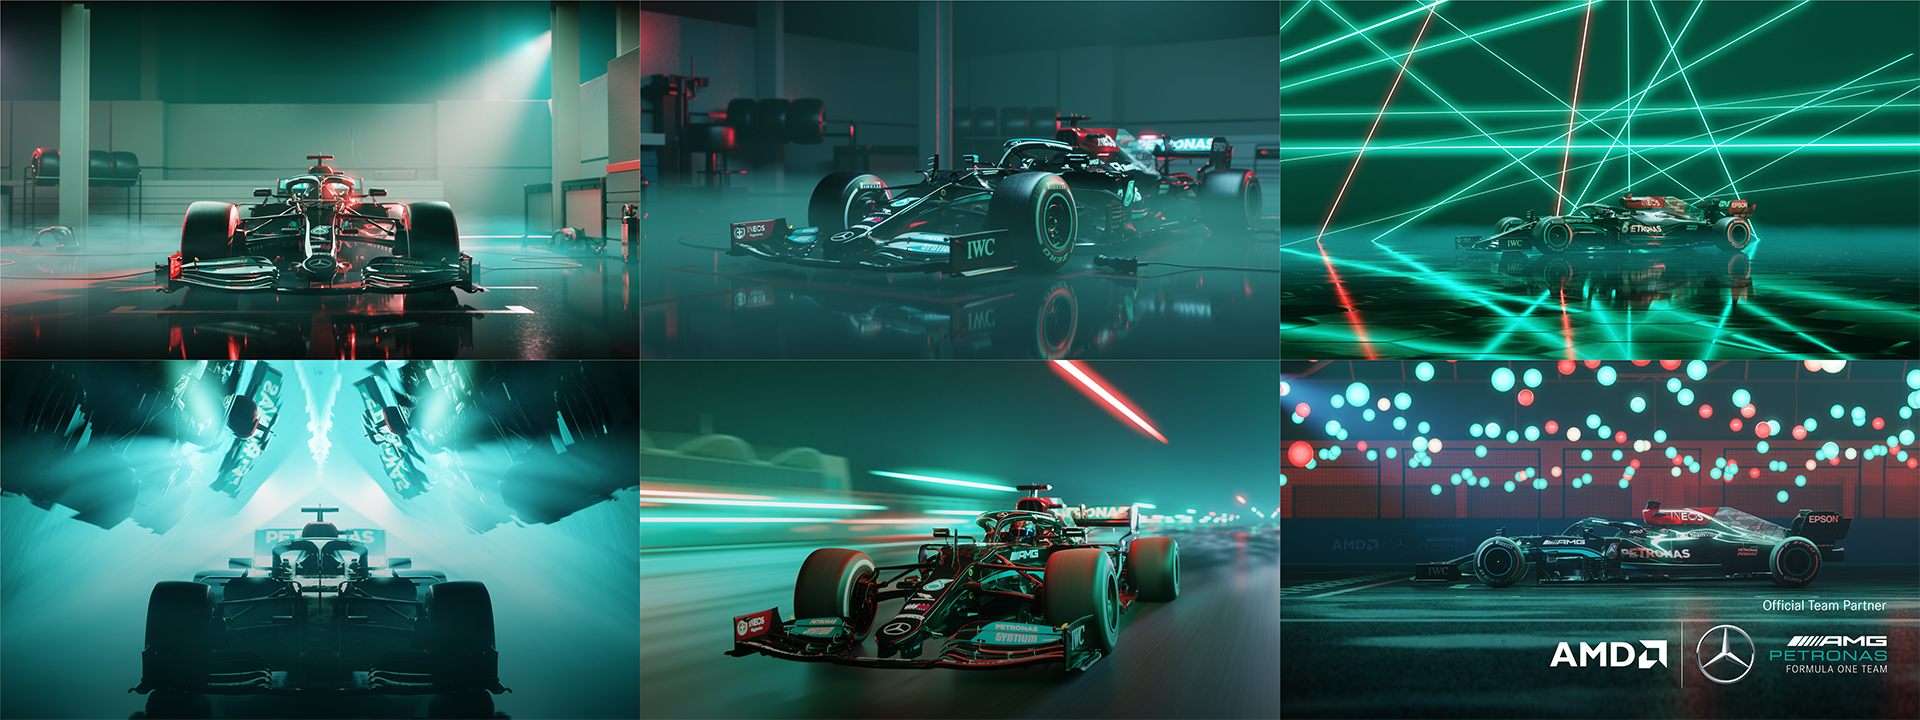 Amazing Mercedes-AMG F1 Animation—Boasts AMD Radeon Pro and Blender  Technologies - Architosh